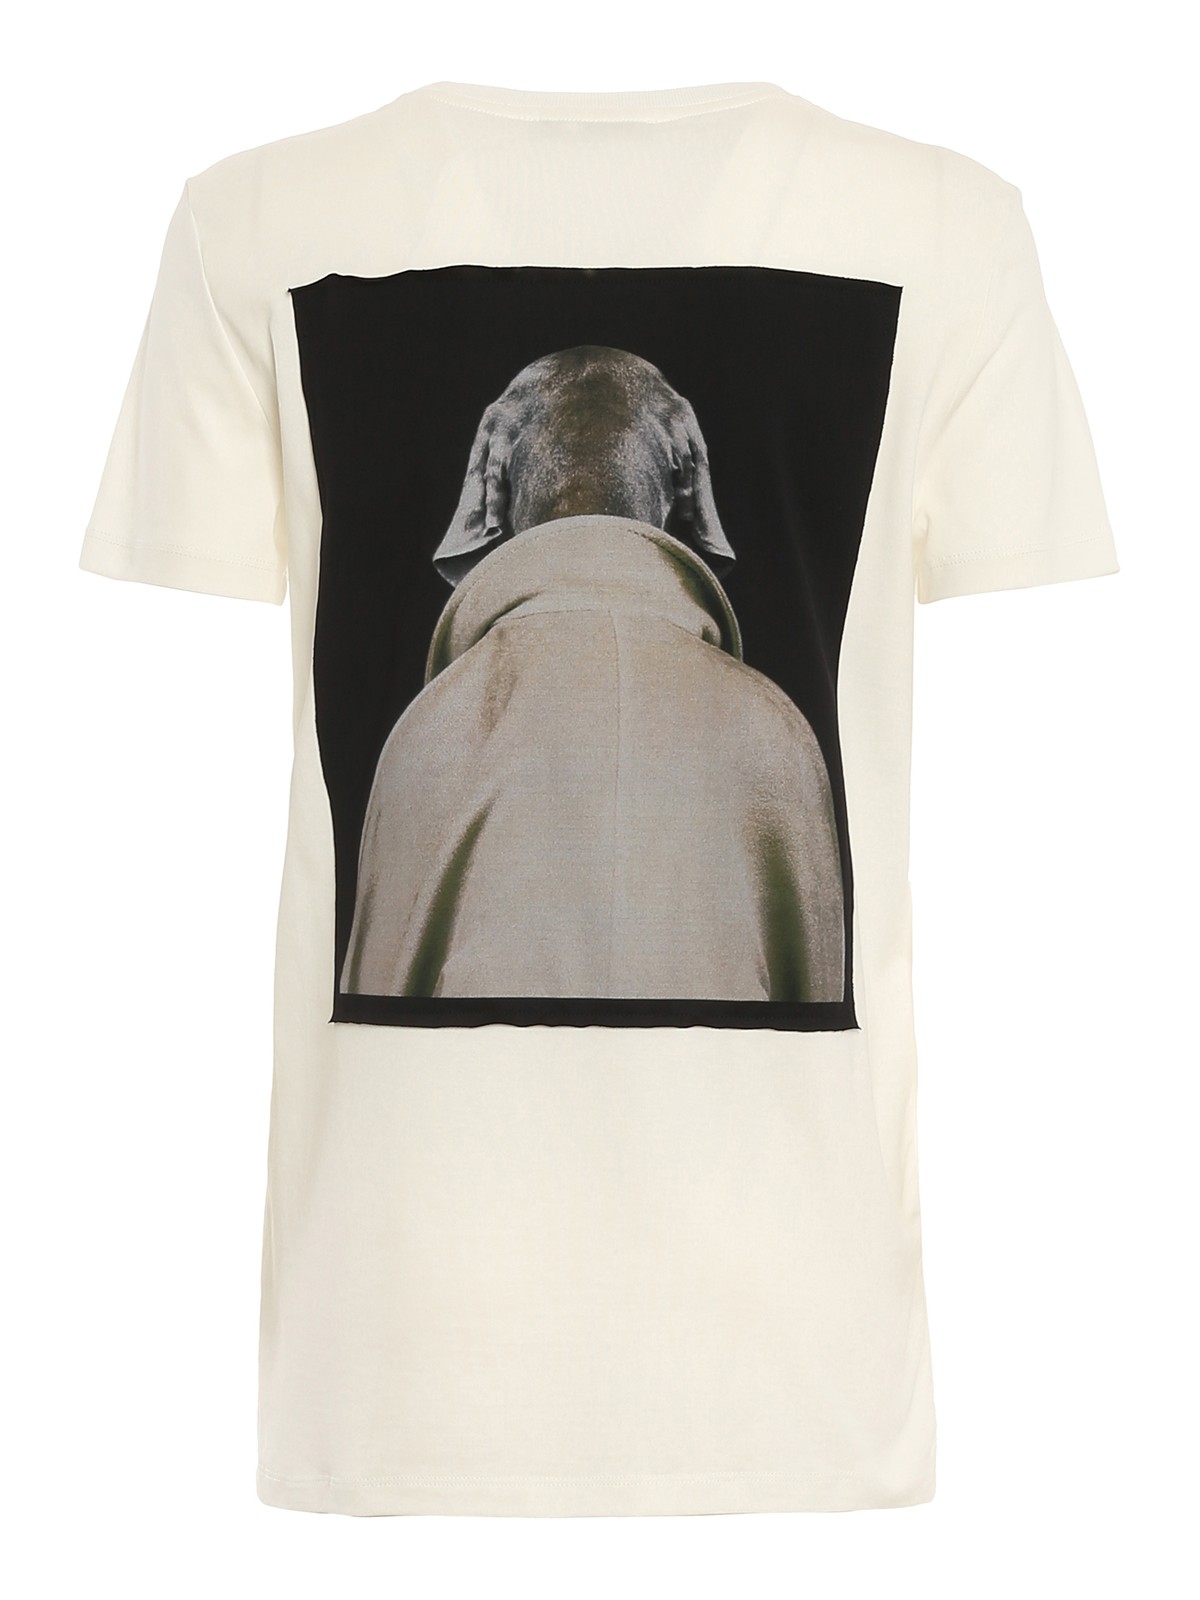 T-shirts Max Mara - Dogstar T-shirt - 194609196005 | Shop online at iKRIX